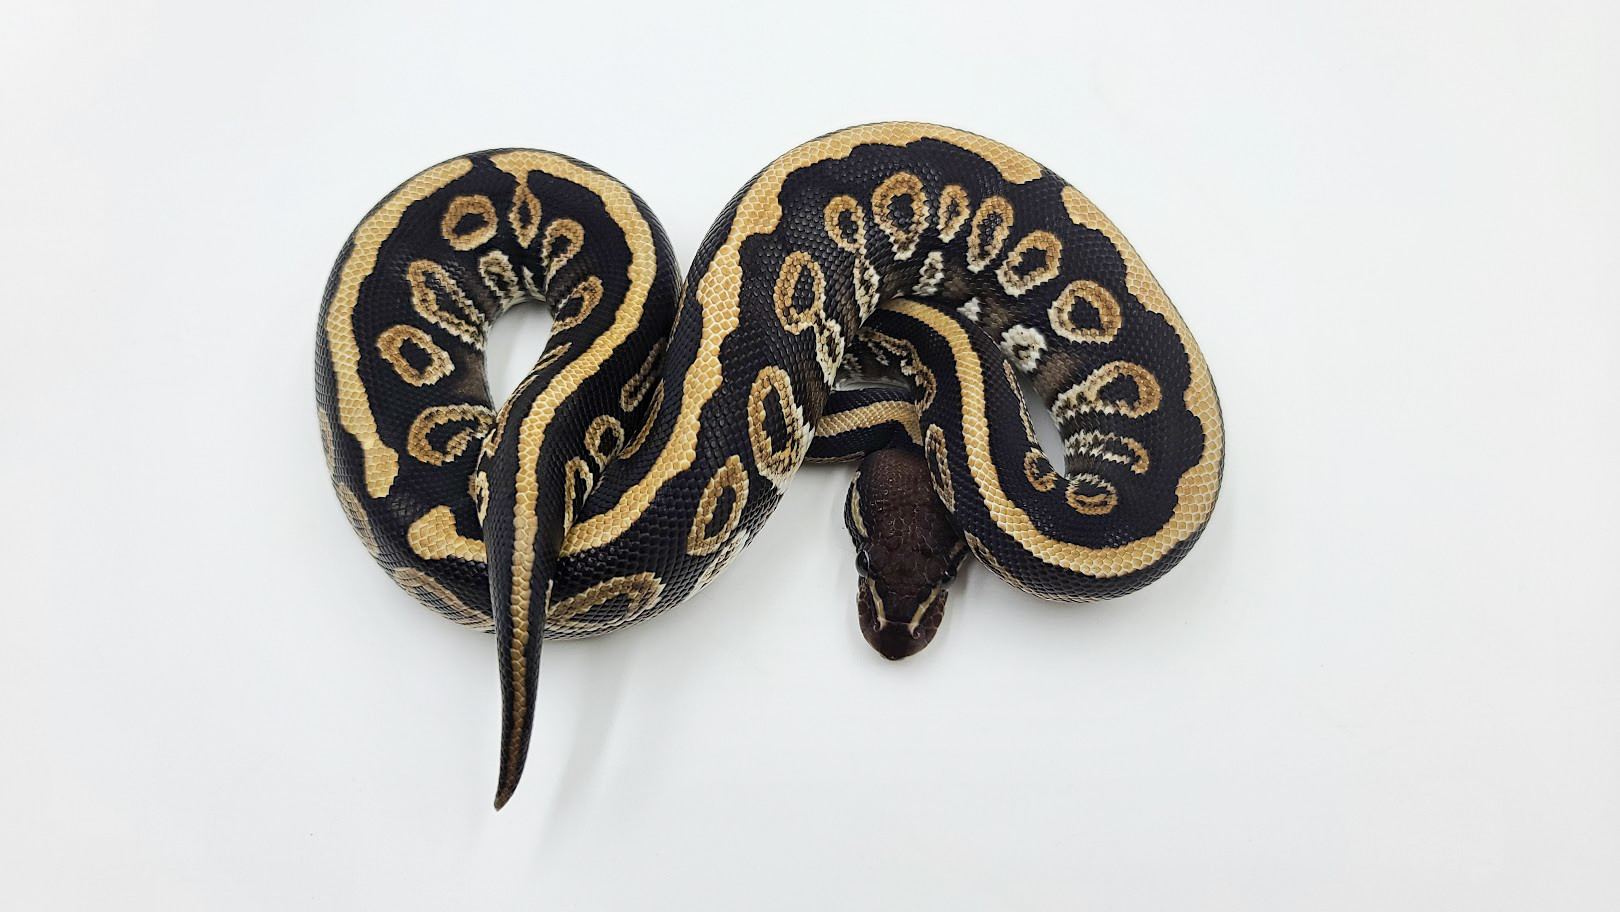 Black Lace Ball Python by The Royal Pythons